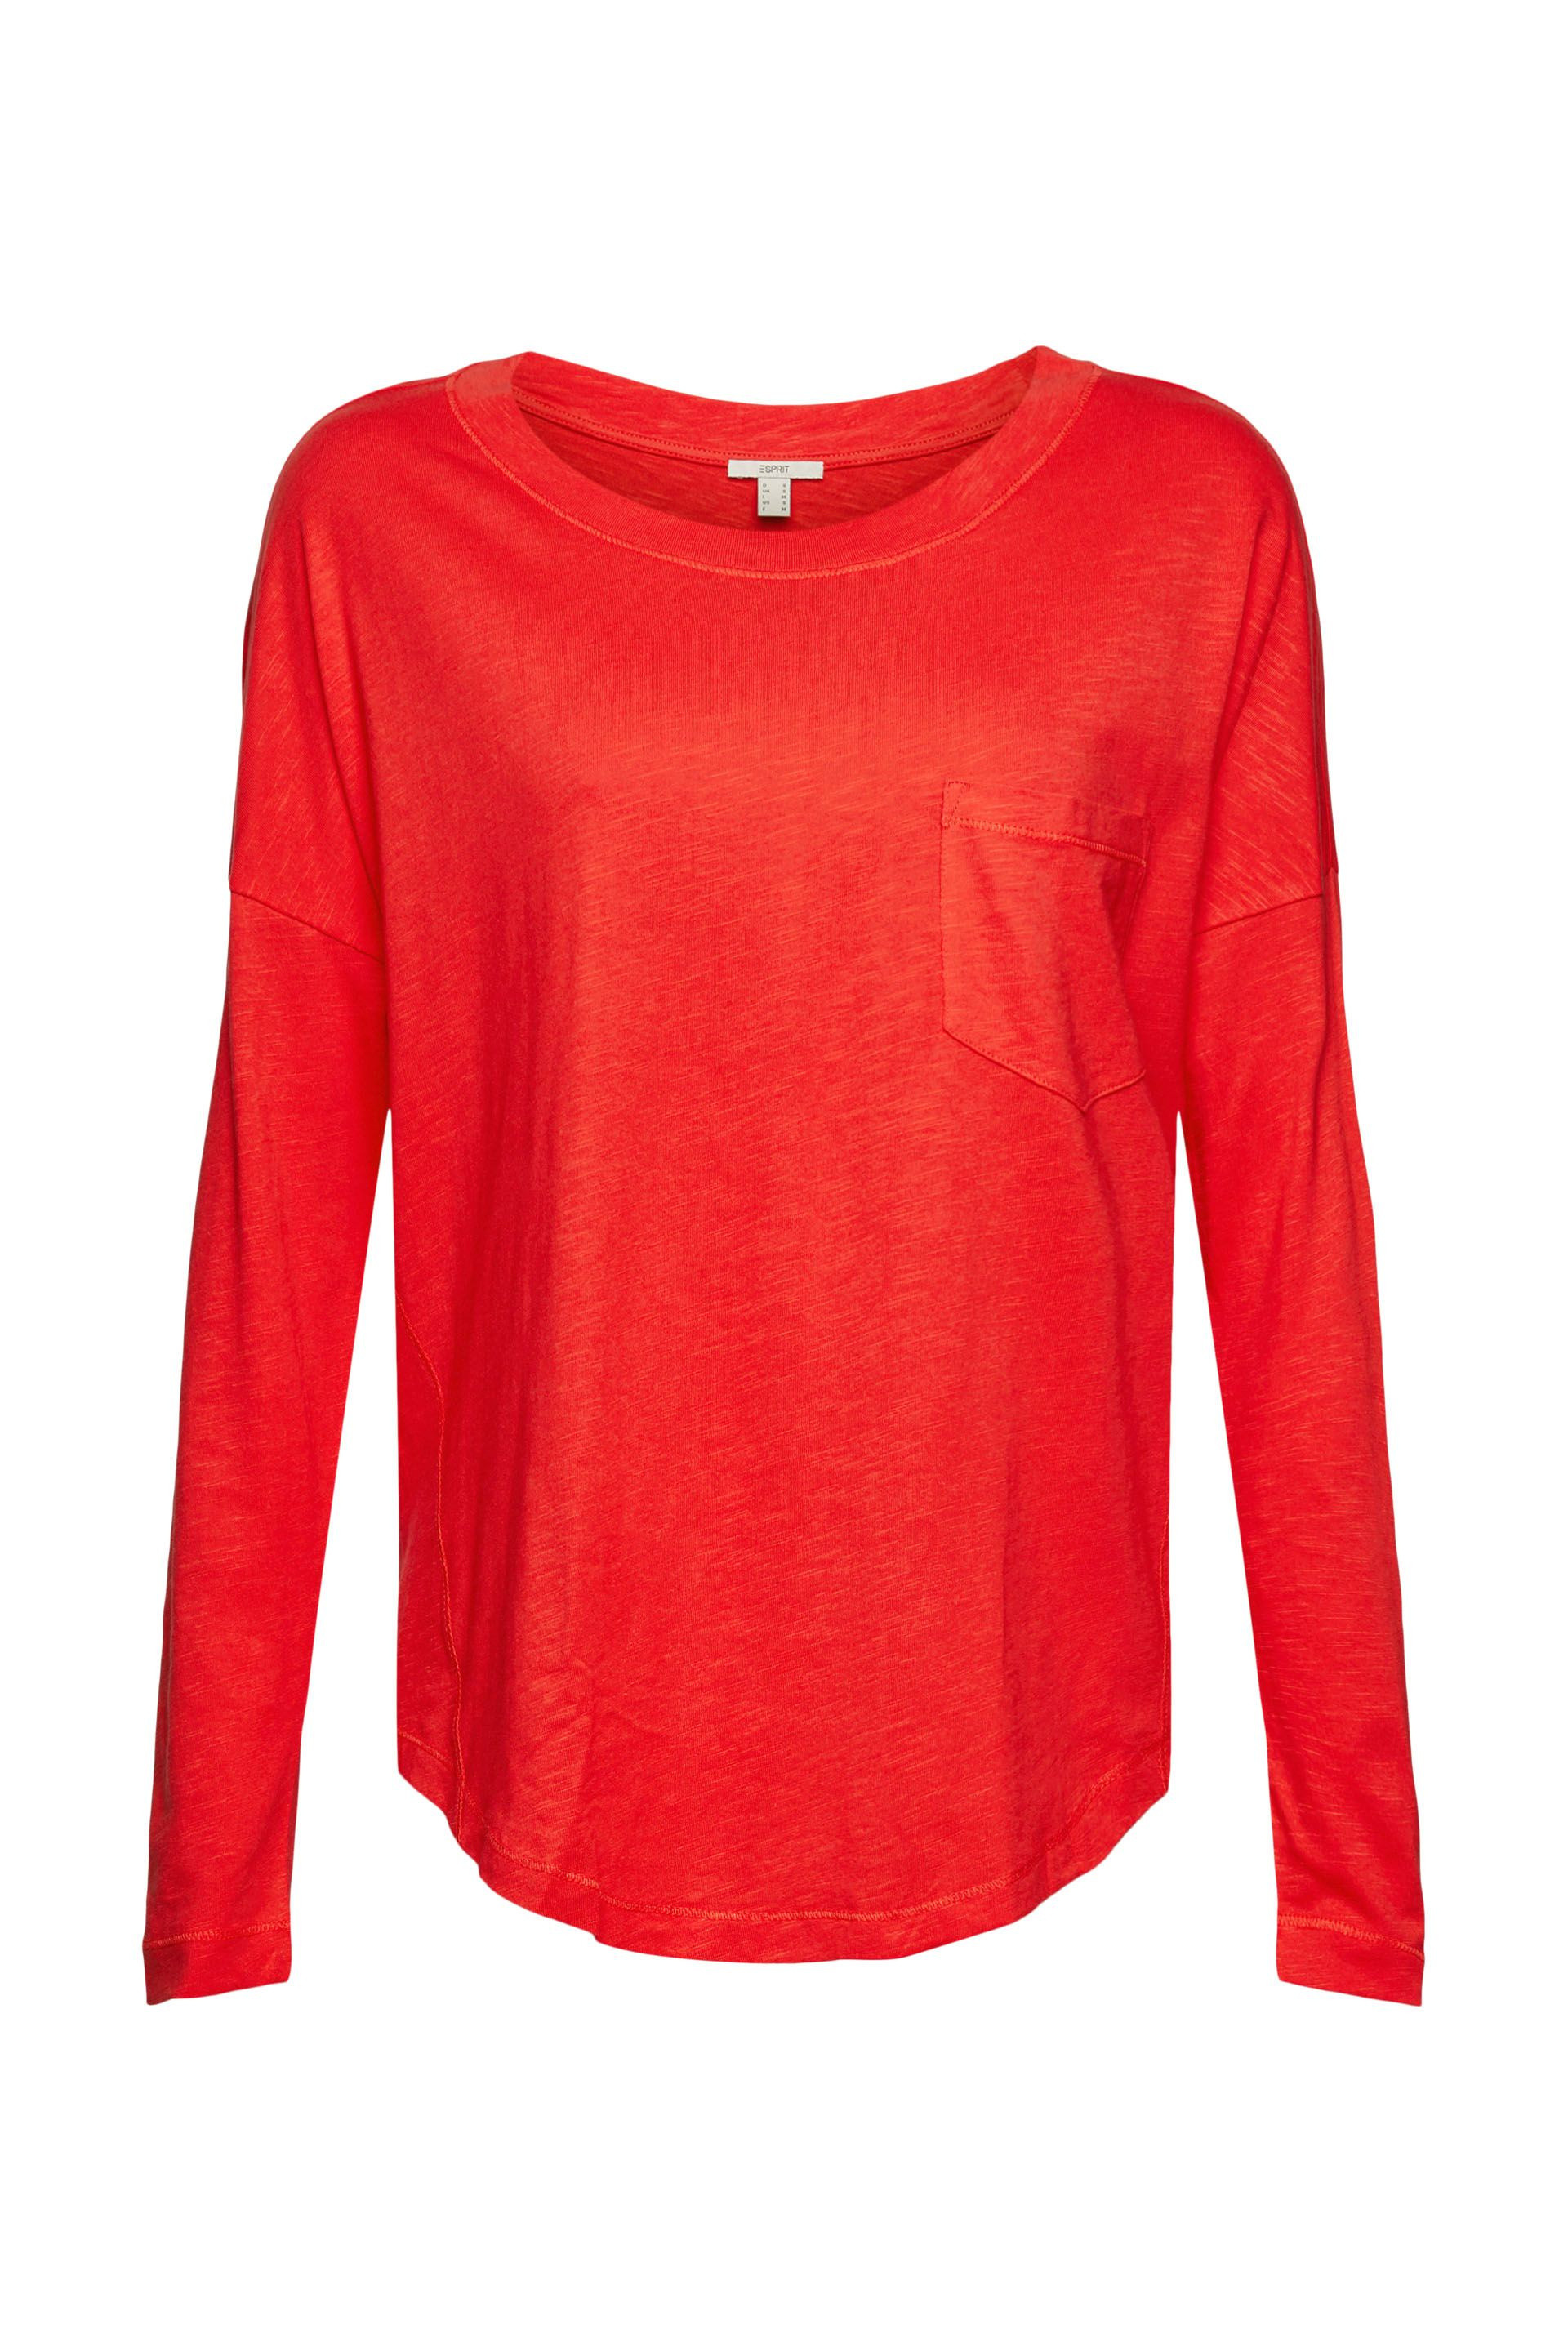 T-shirt a maniche lunghe con tasca, Arancione, large image number 0